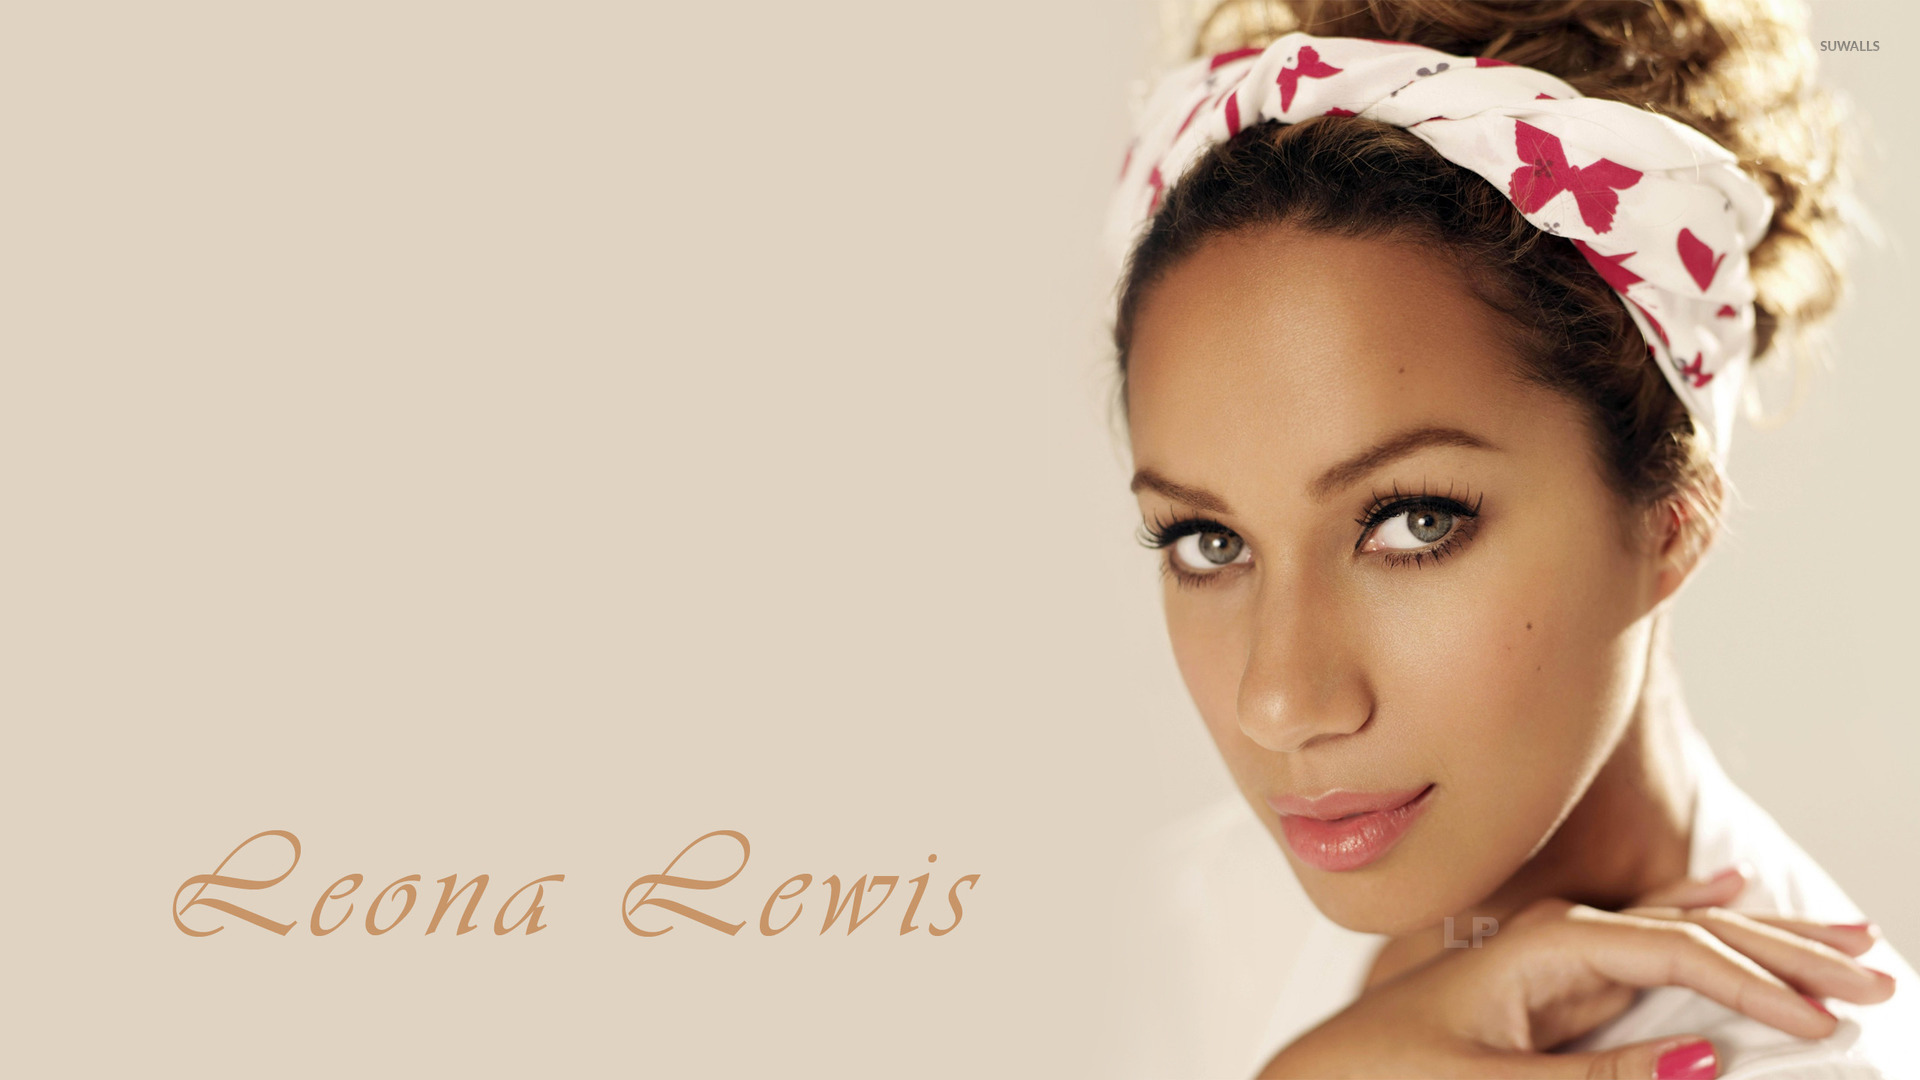 Leona Lewis Wallpaper Celebrity